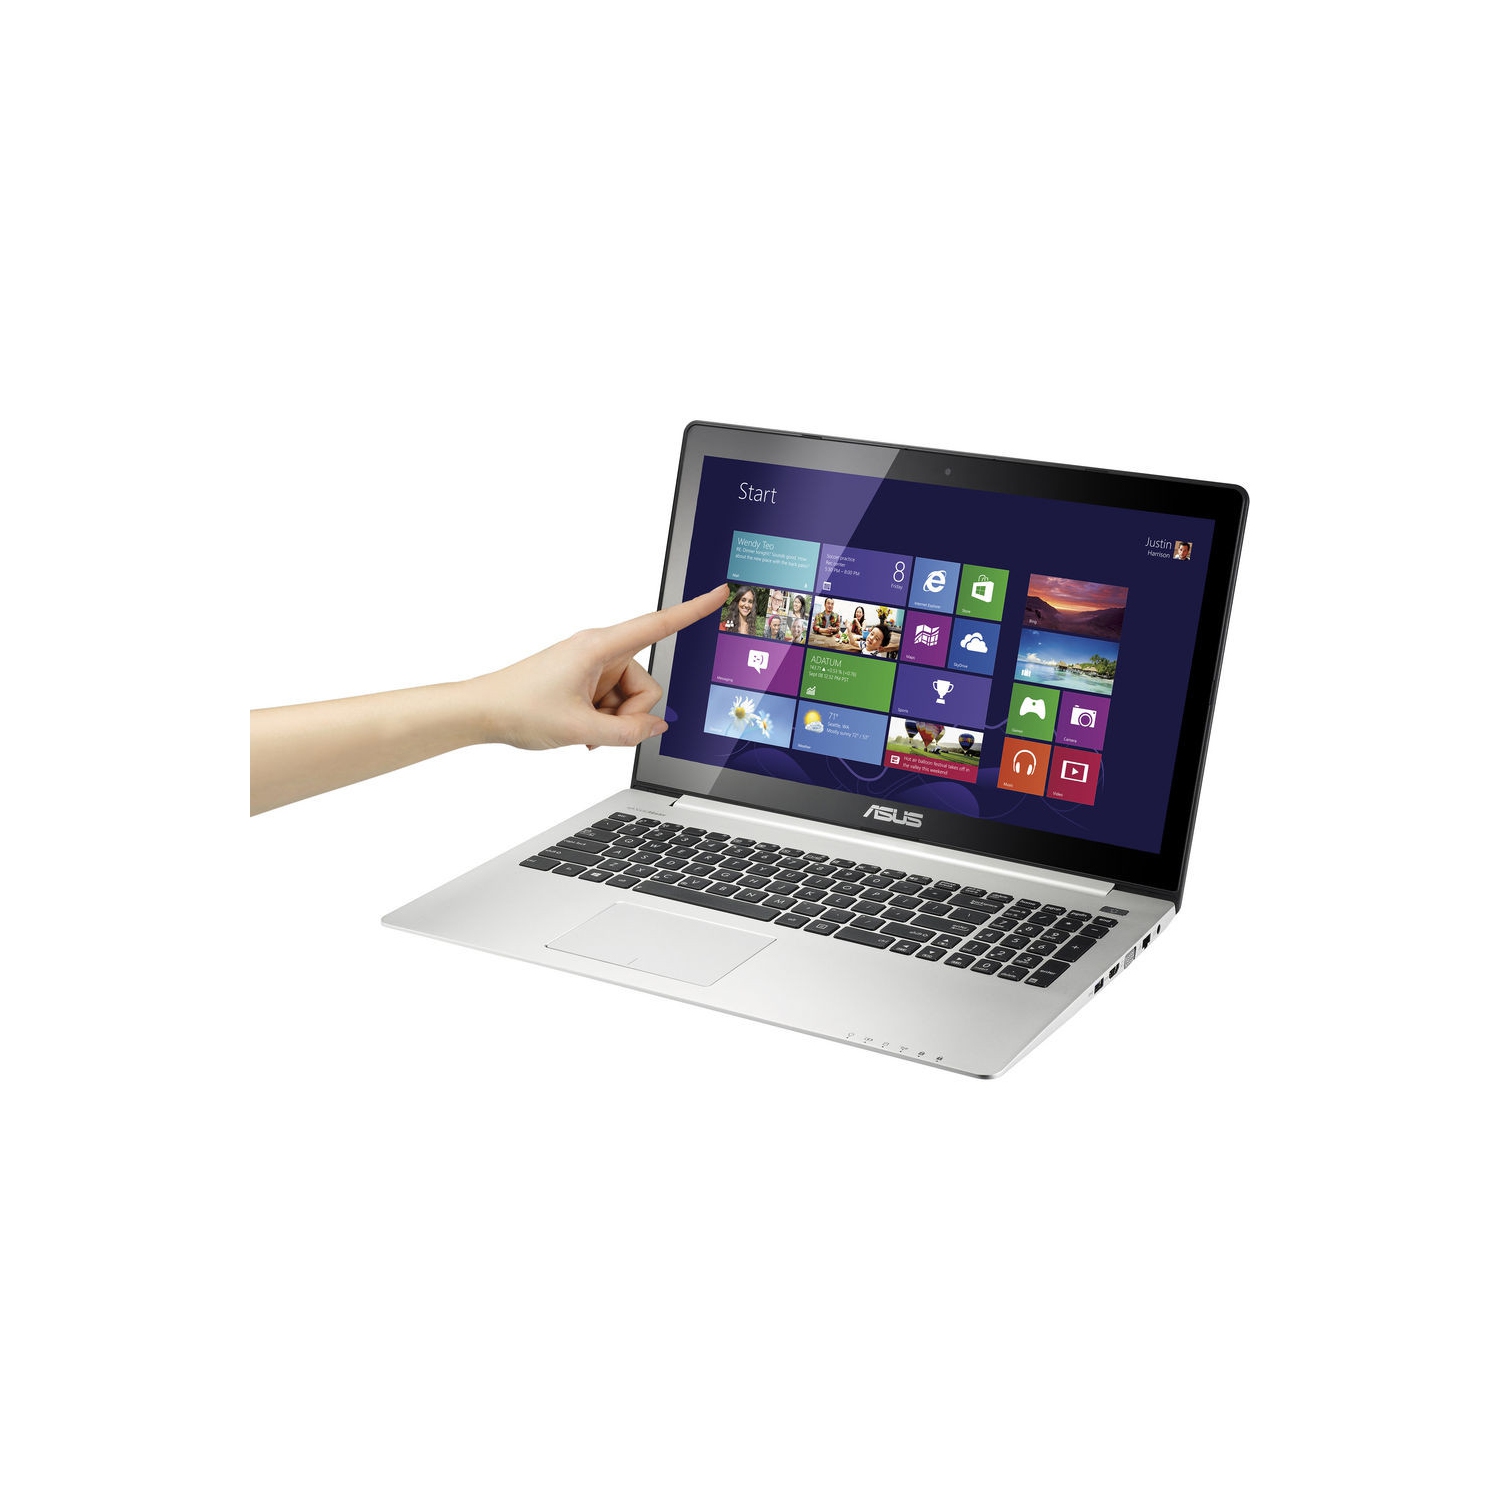 ASUS VivoBook S500CA, 15.6" HD Touchscreen Laptop, Core i7 3rd Gen, 8Gb RAM, 256Gb SSD, Windows 10 (Refurbished)